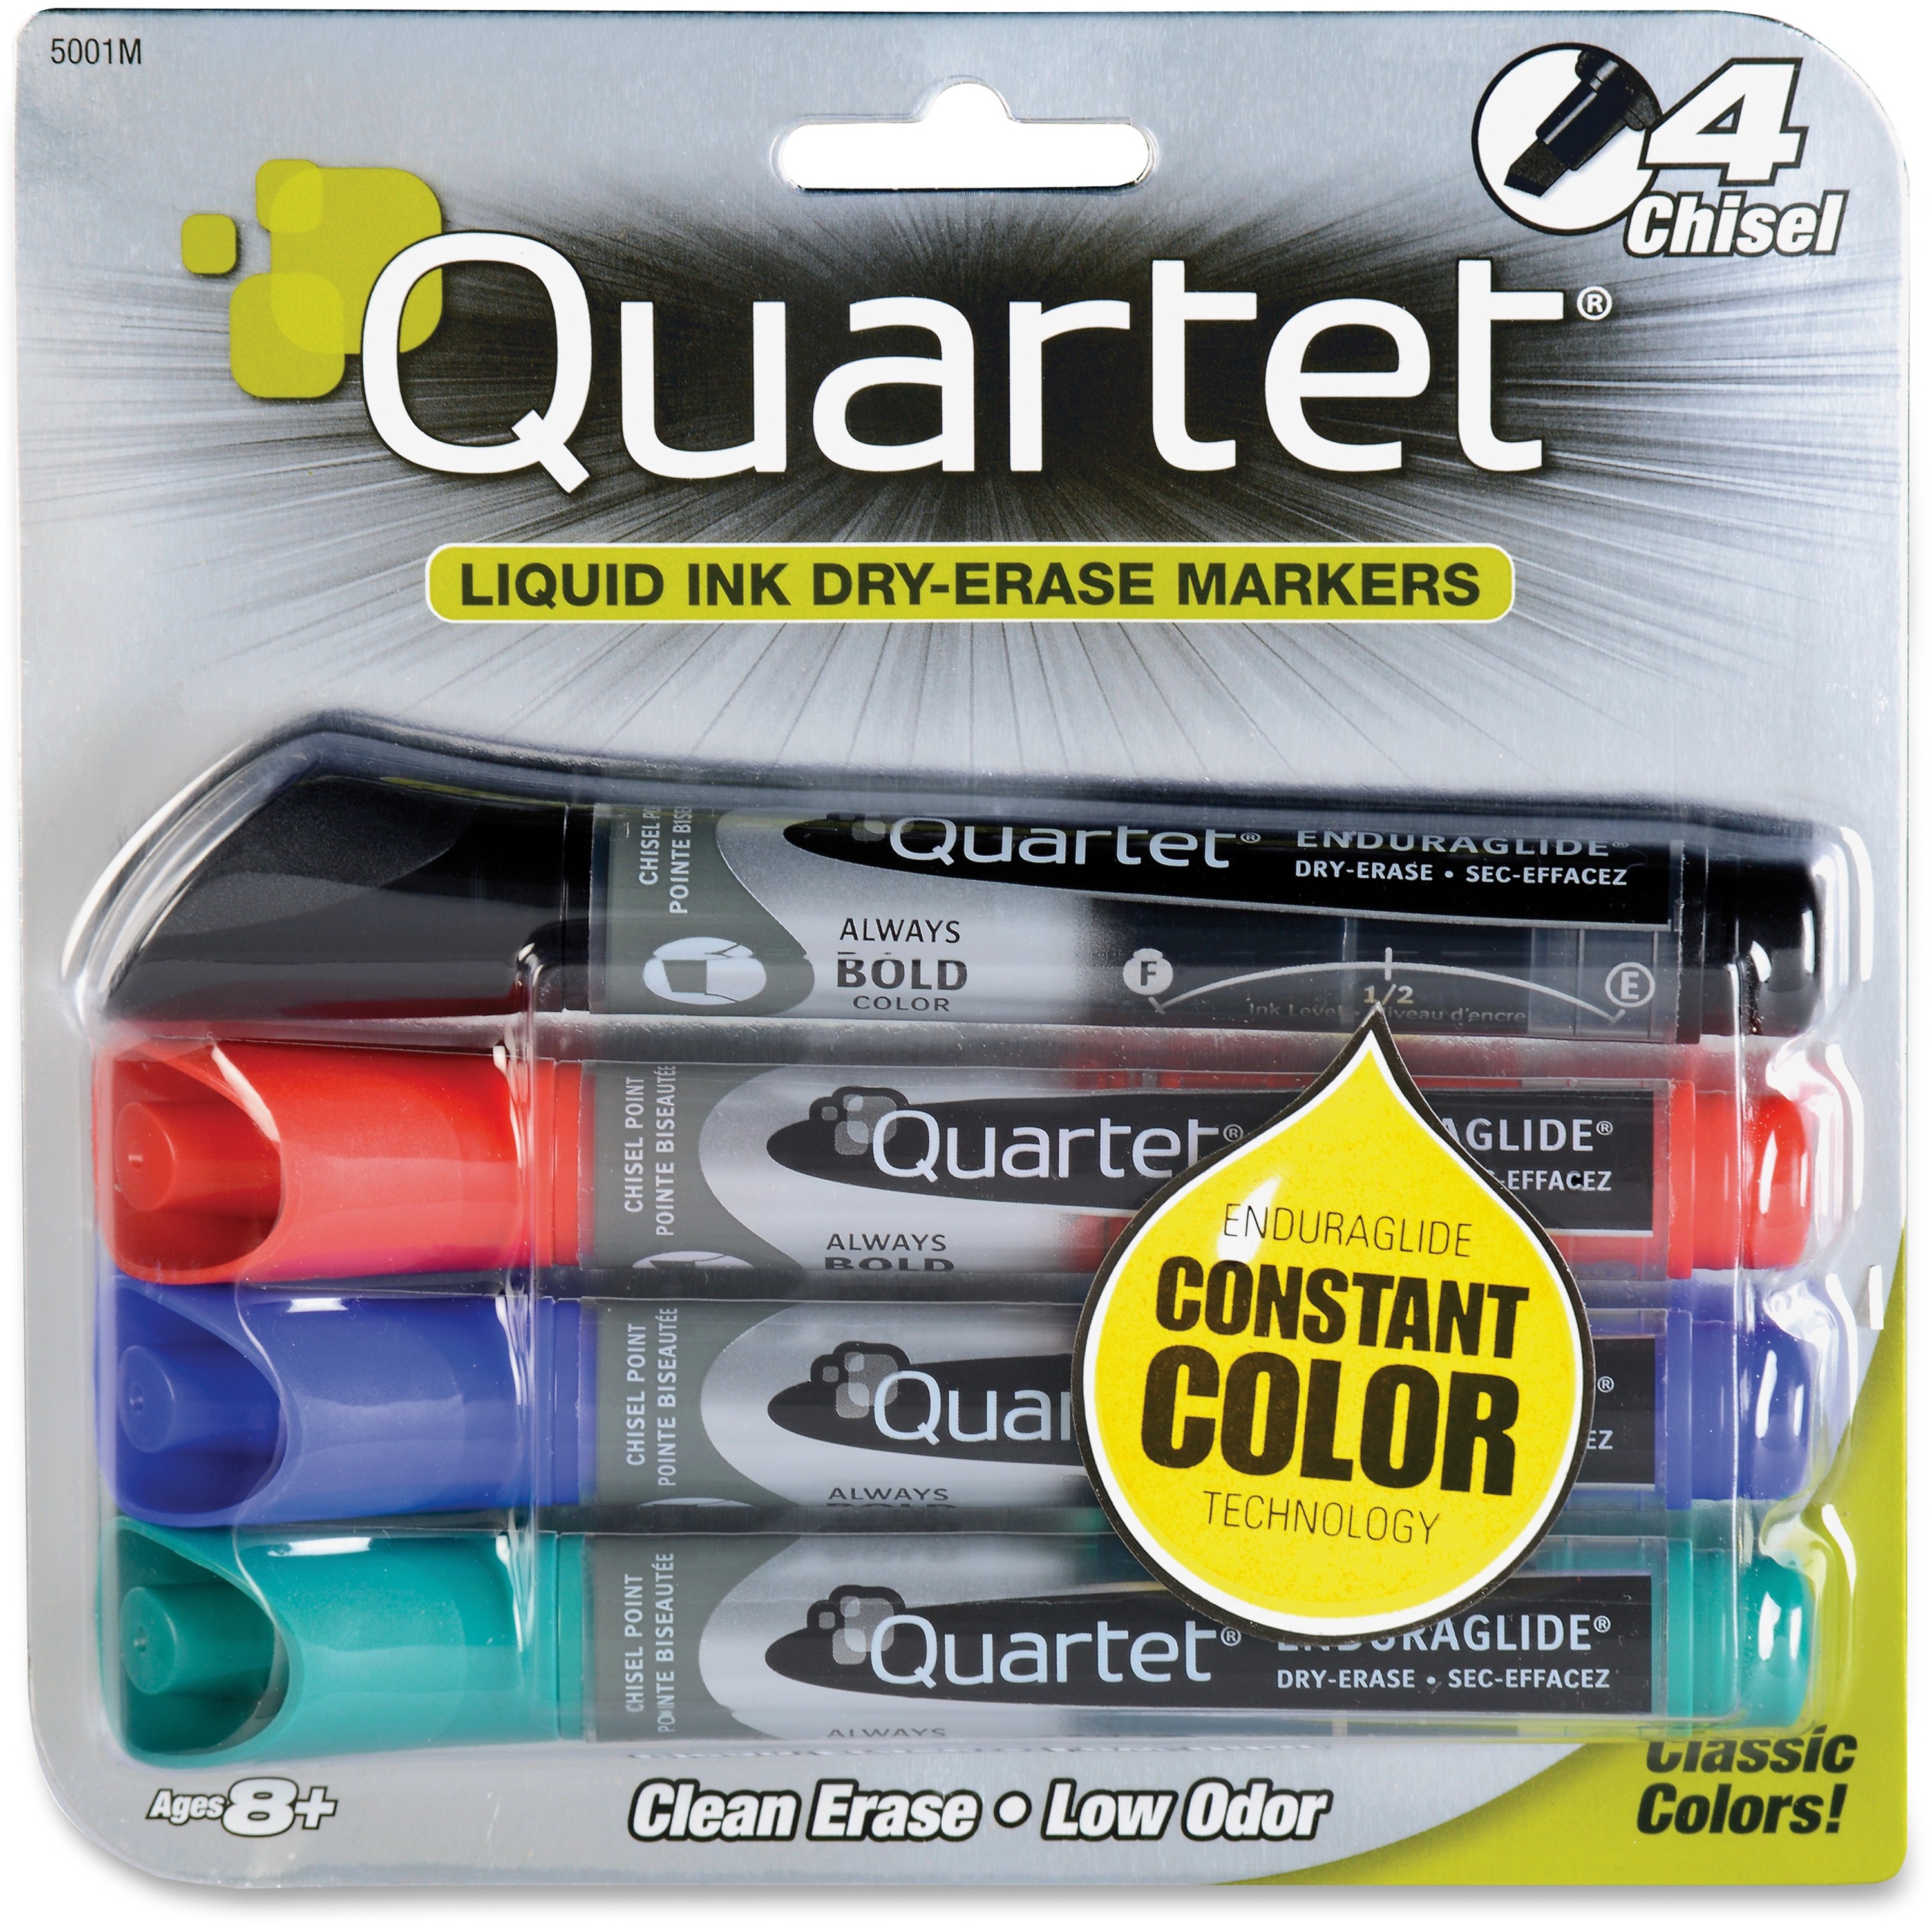  Quartet Dry Erase Markers Accessory Kit, Includes 5